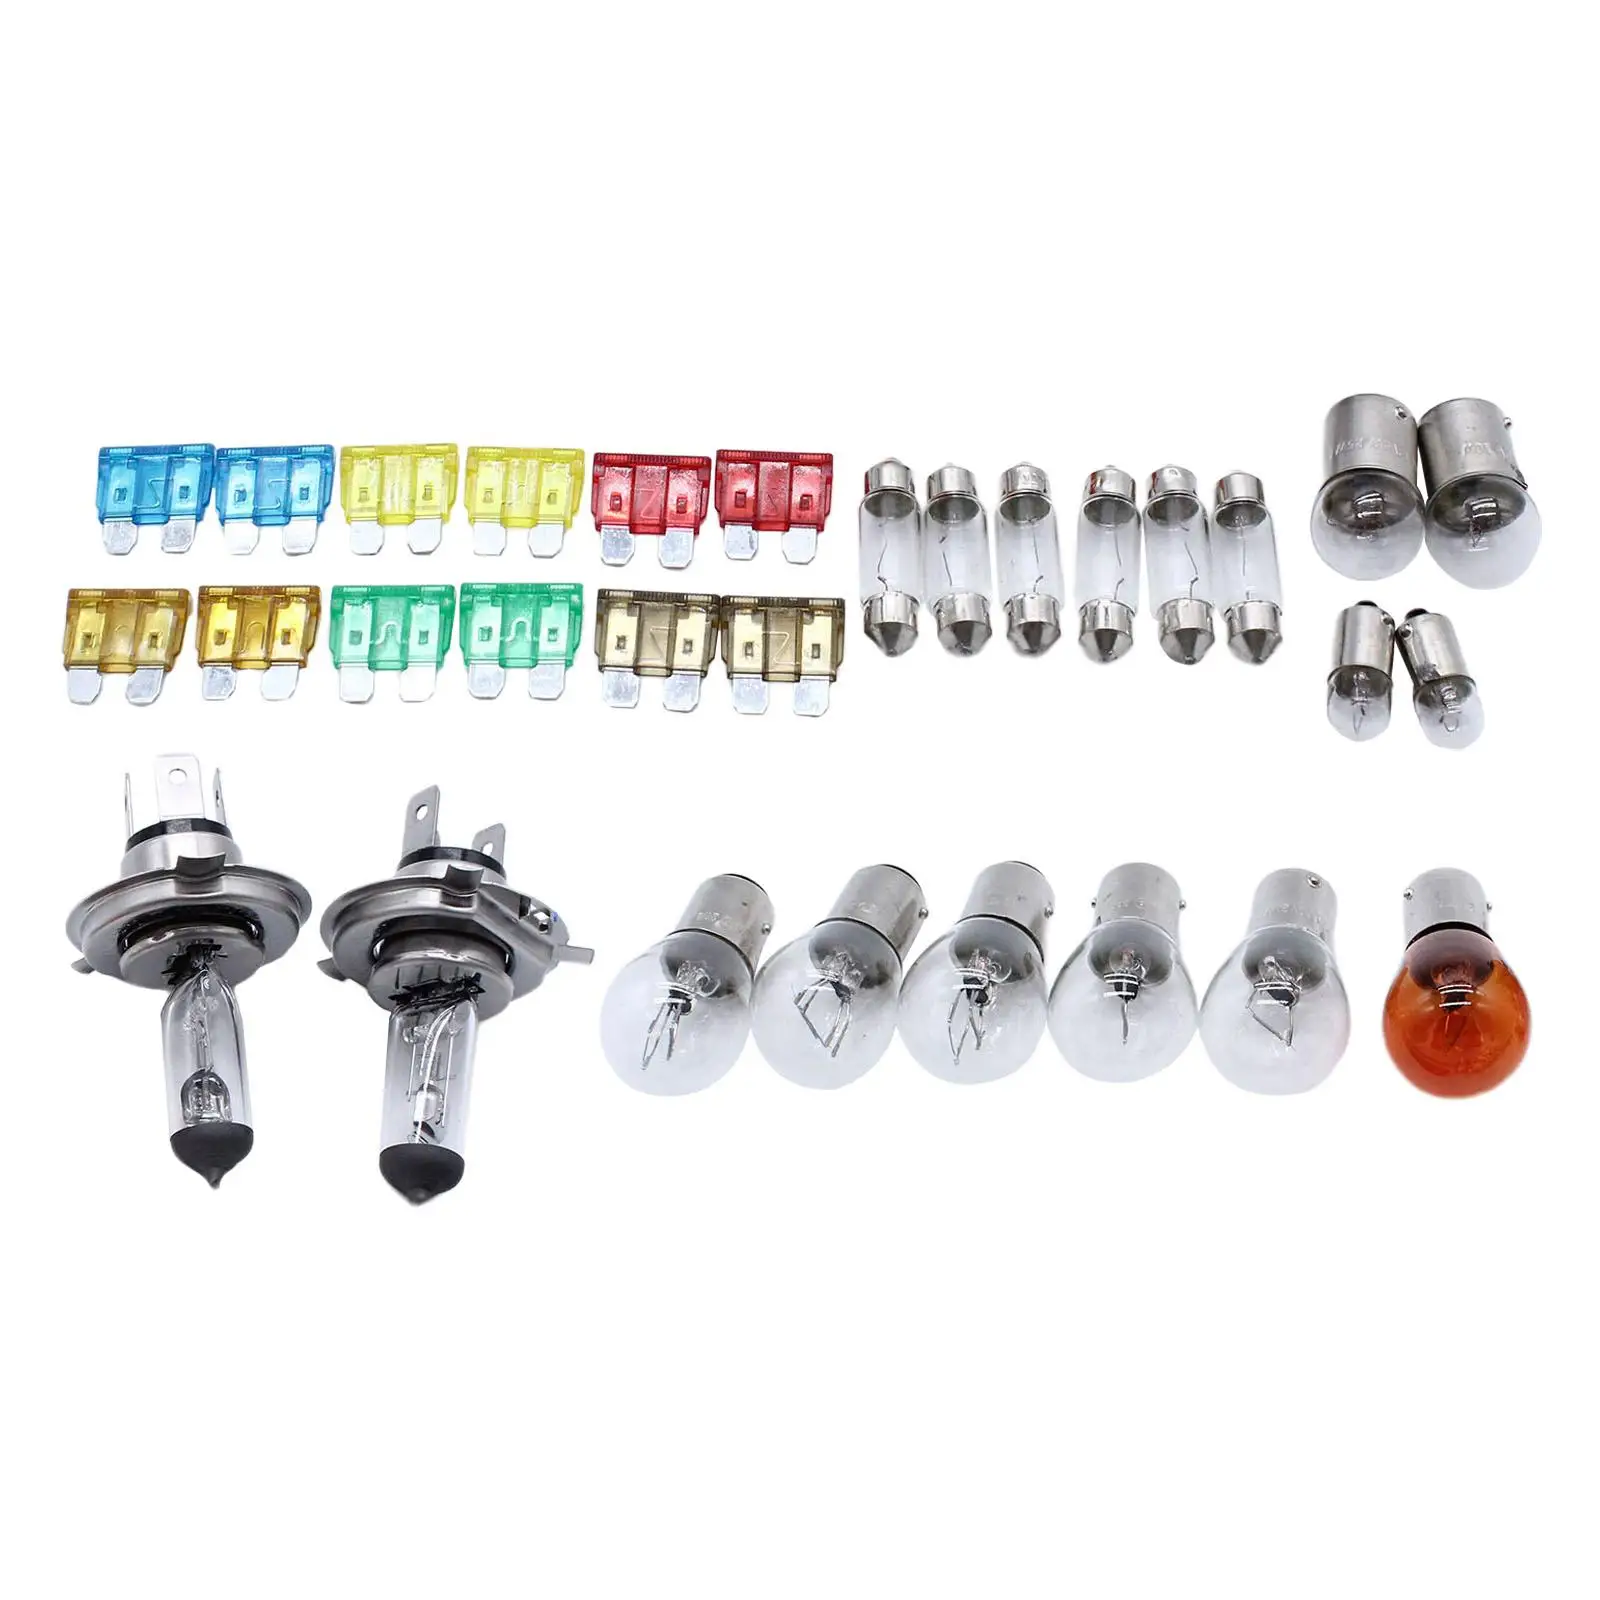 30 Pieces H4 Light Bulb Kit Set Spares Parts Super Bright Fit for Driving